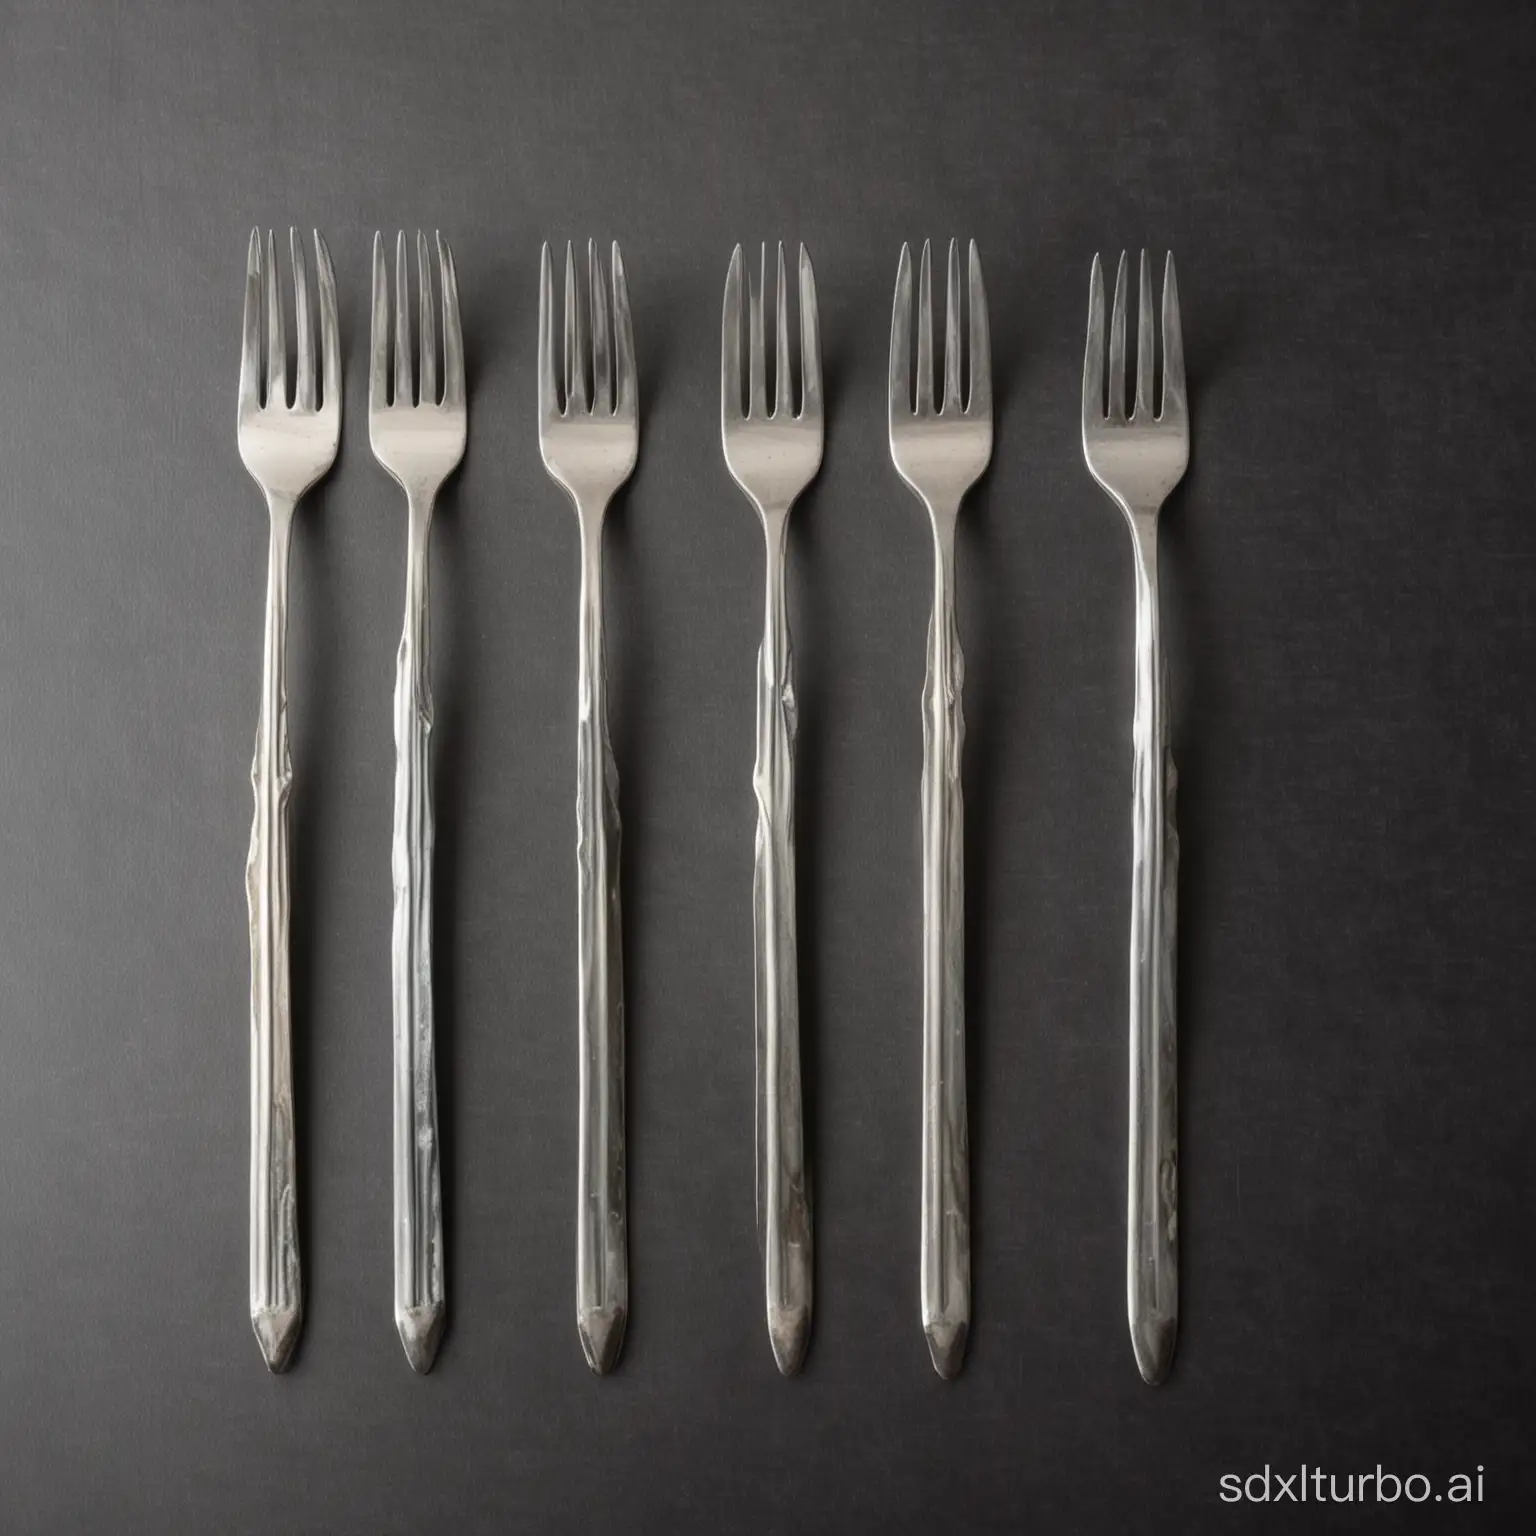 Six forks arranged vertically